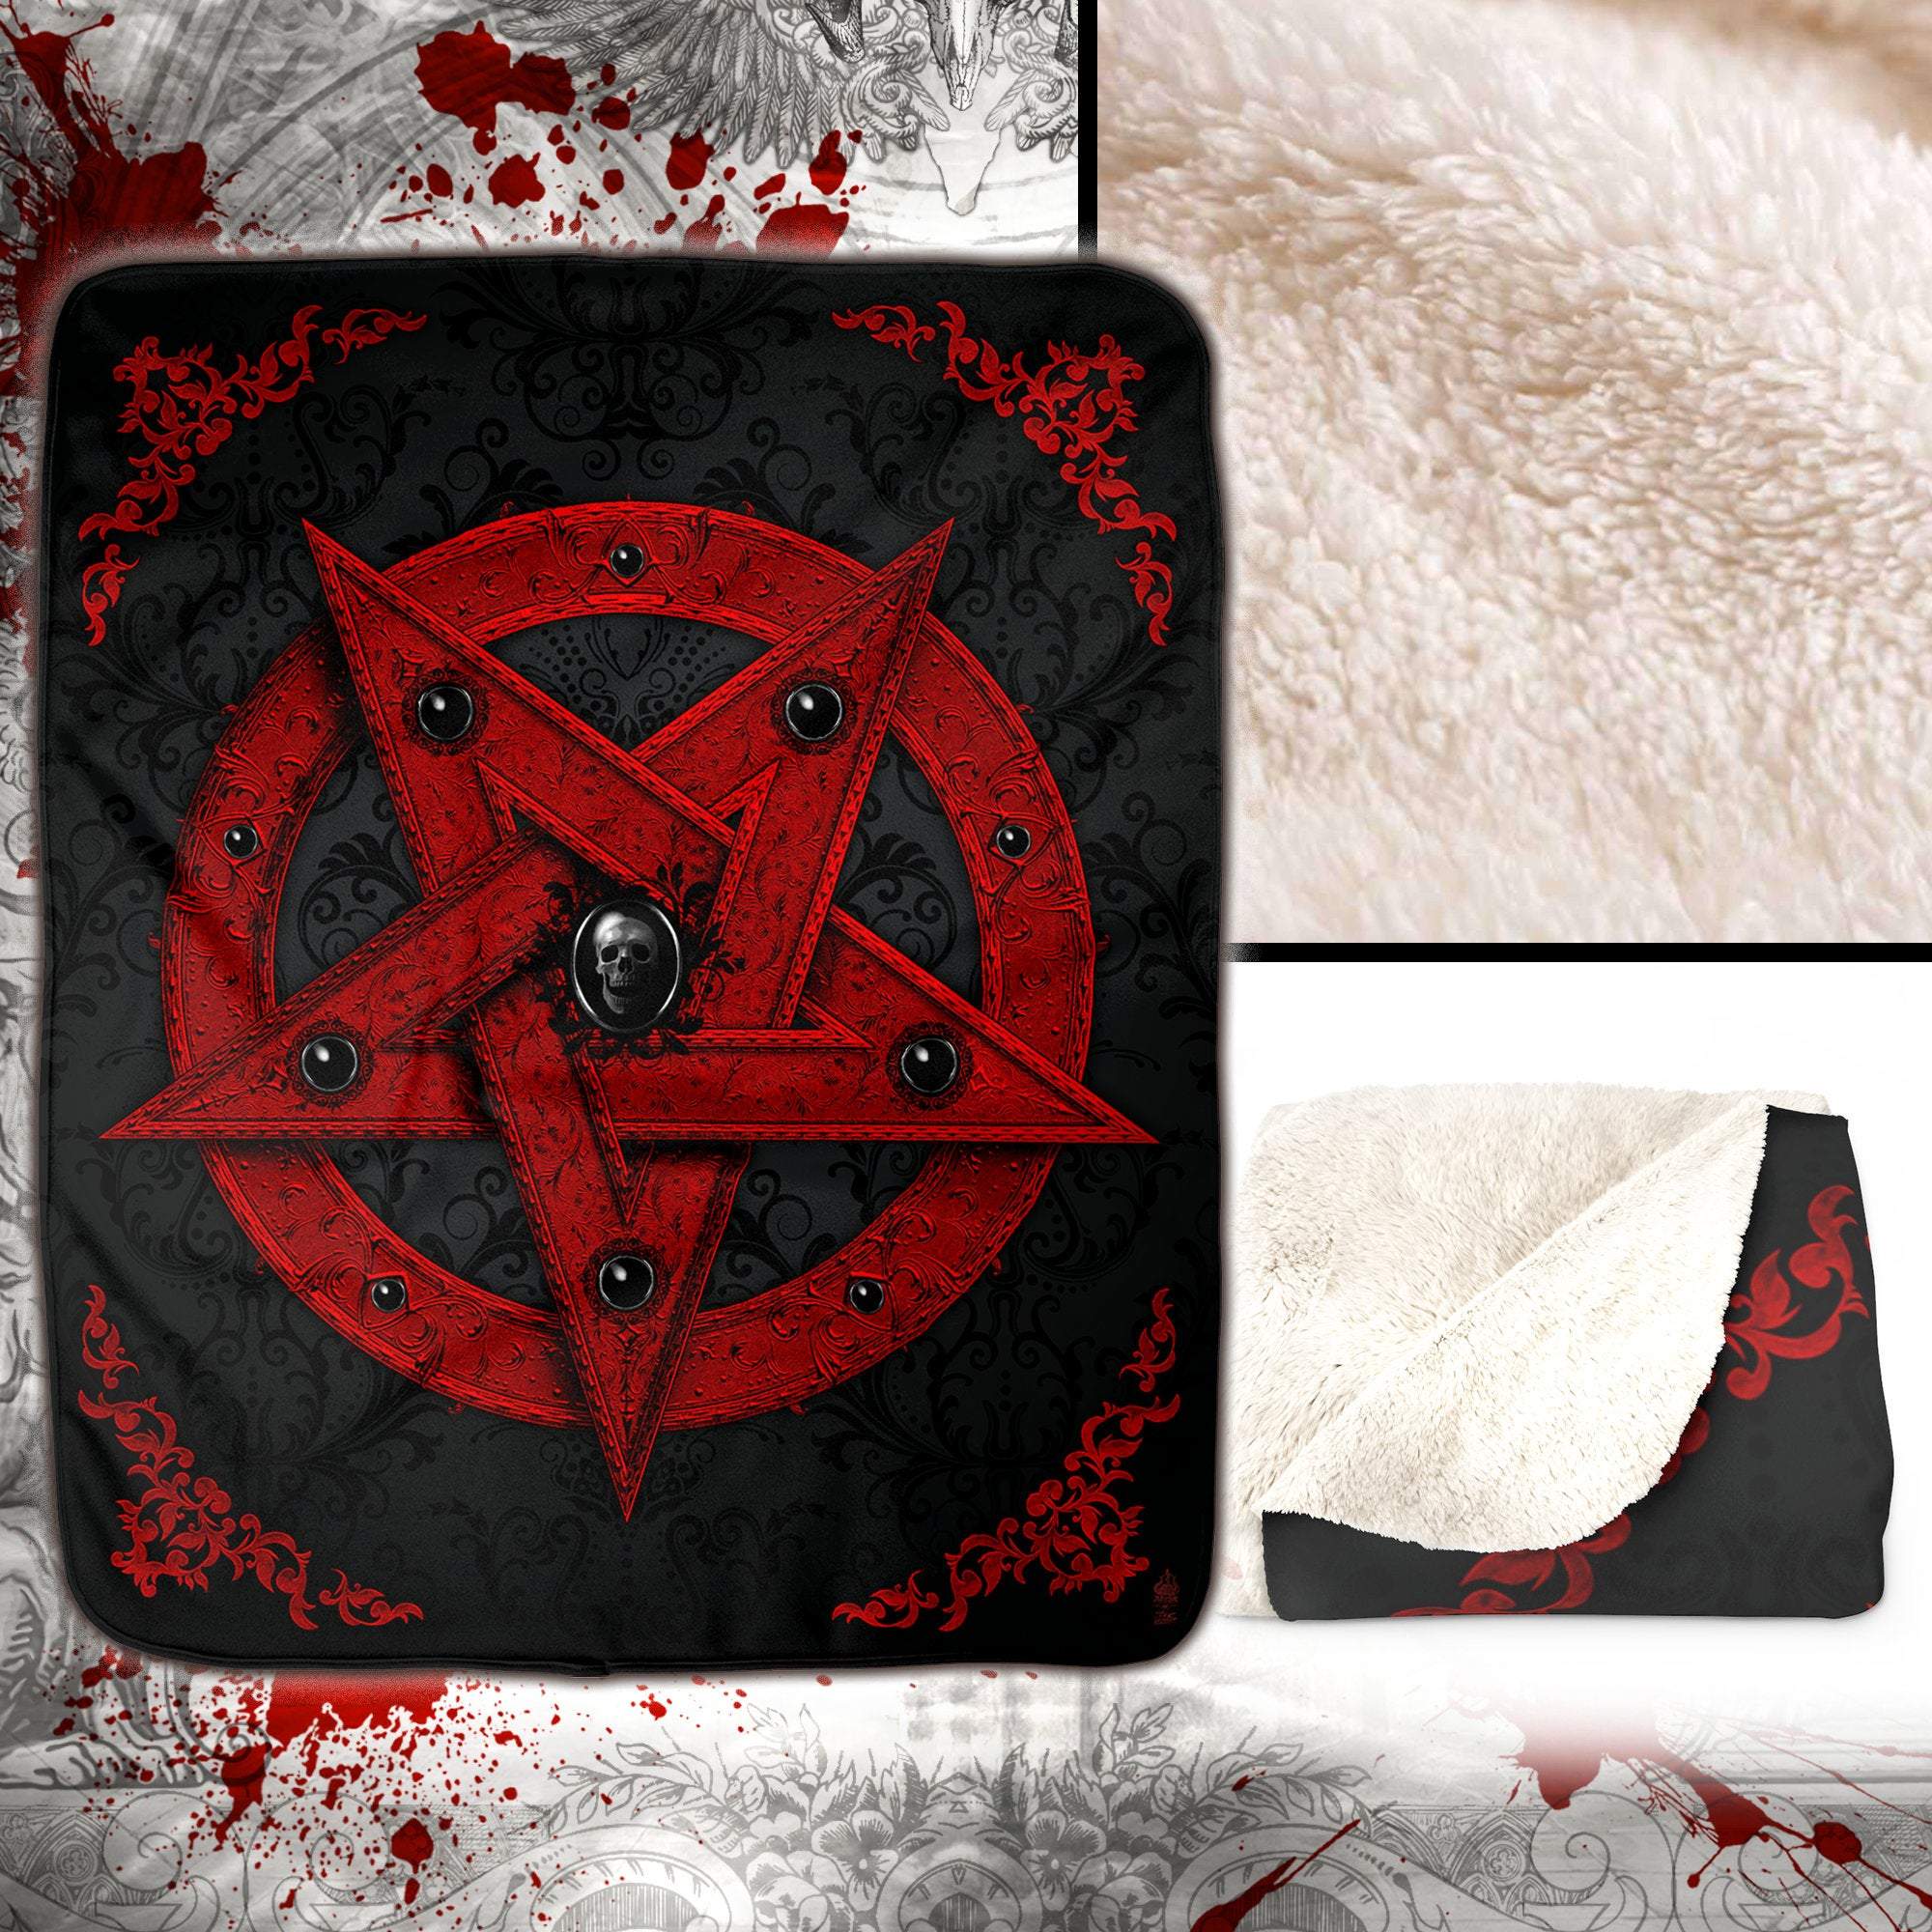 Pentagram, Satanic Throw Fleece Blanket, Occult & Gothic Home Decor, Alternative Art Gift - Red - Abysm Internal